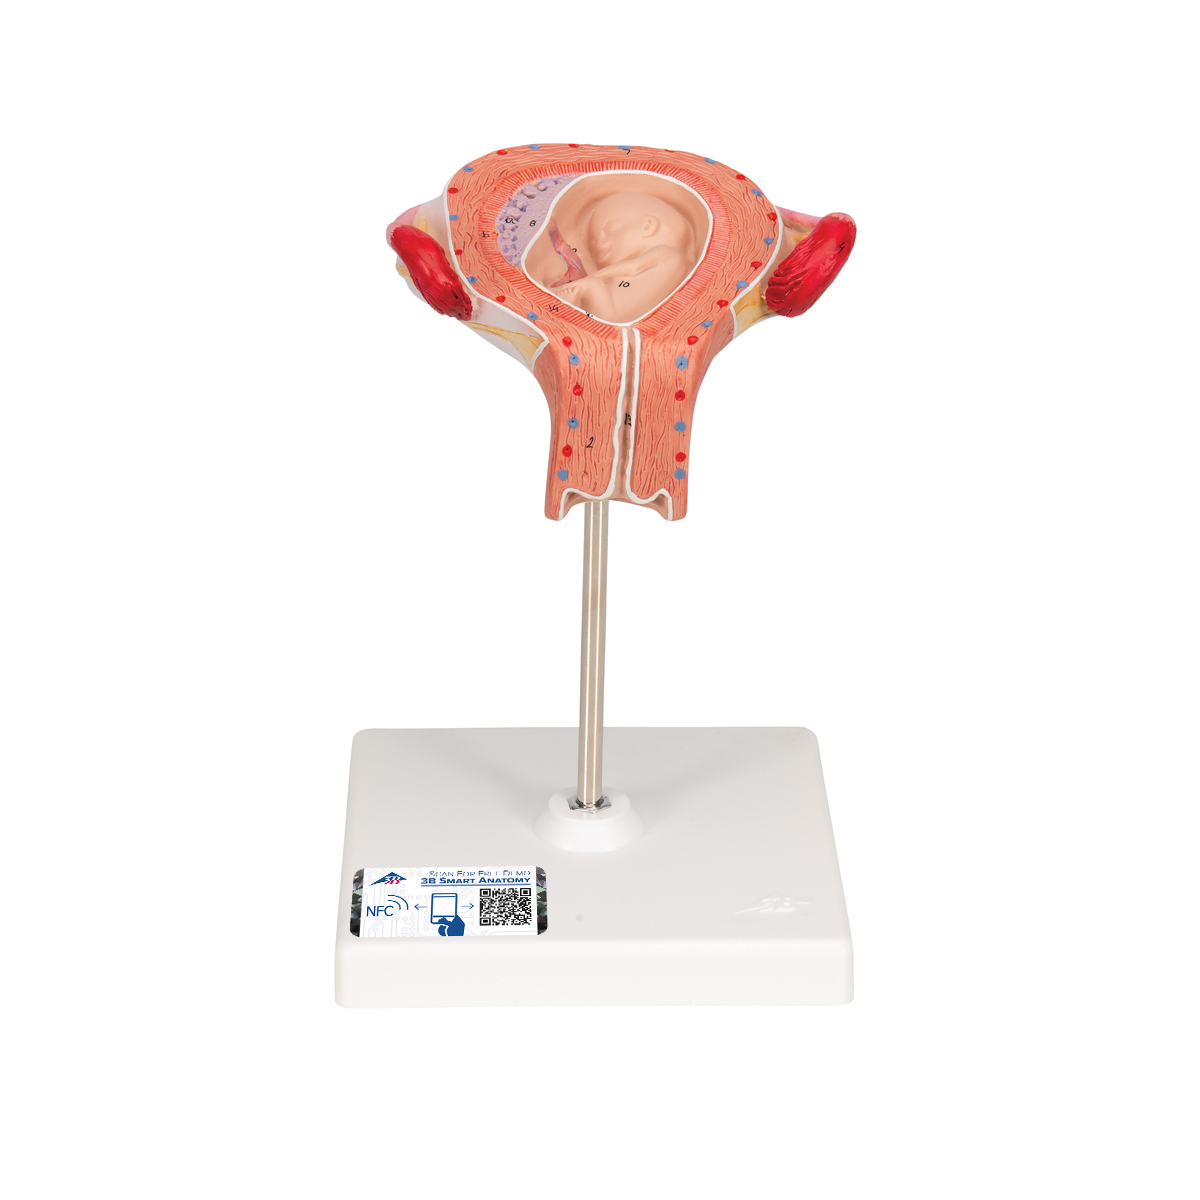 Fetus Modell, 3. Monat - 3B Smart Anatomy, Bestellnummer 1000324, L10/3, 3B Scientific